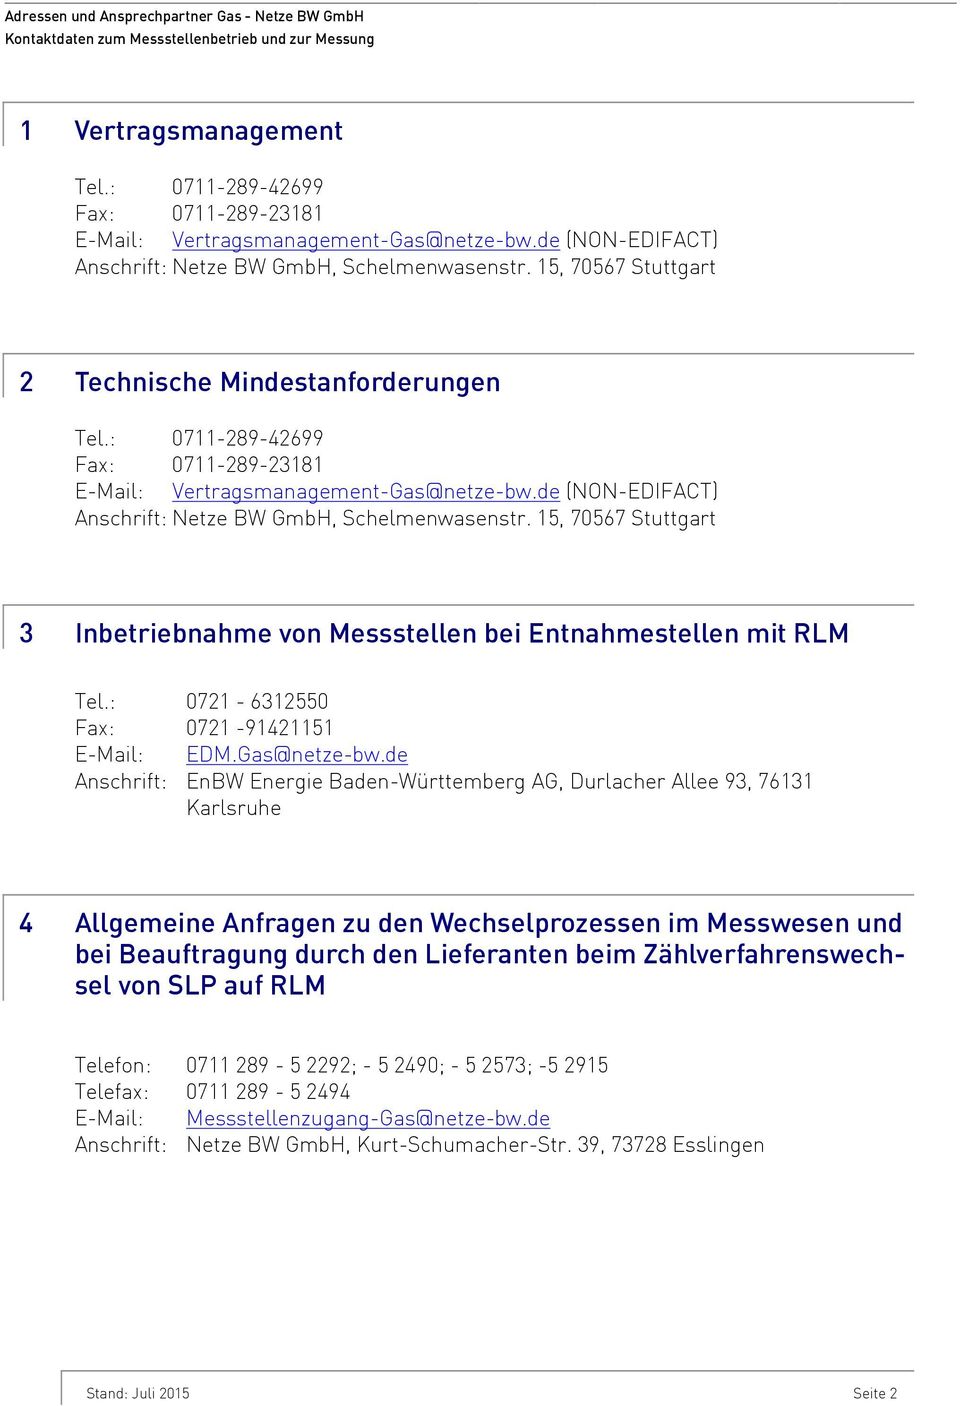 de (NON-EDIFACT) Anschrift: Netze BW GmbH, Schelmenwasenstr. 5, 70567 Stuttgart 3 Inbetriebnahme von Messstellen bei Entnahmestellen mit RLM Tel.: 072-632550 Fax: 072-9425 E-Mail: EDM.Gas@netze-bw.